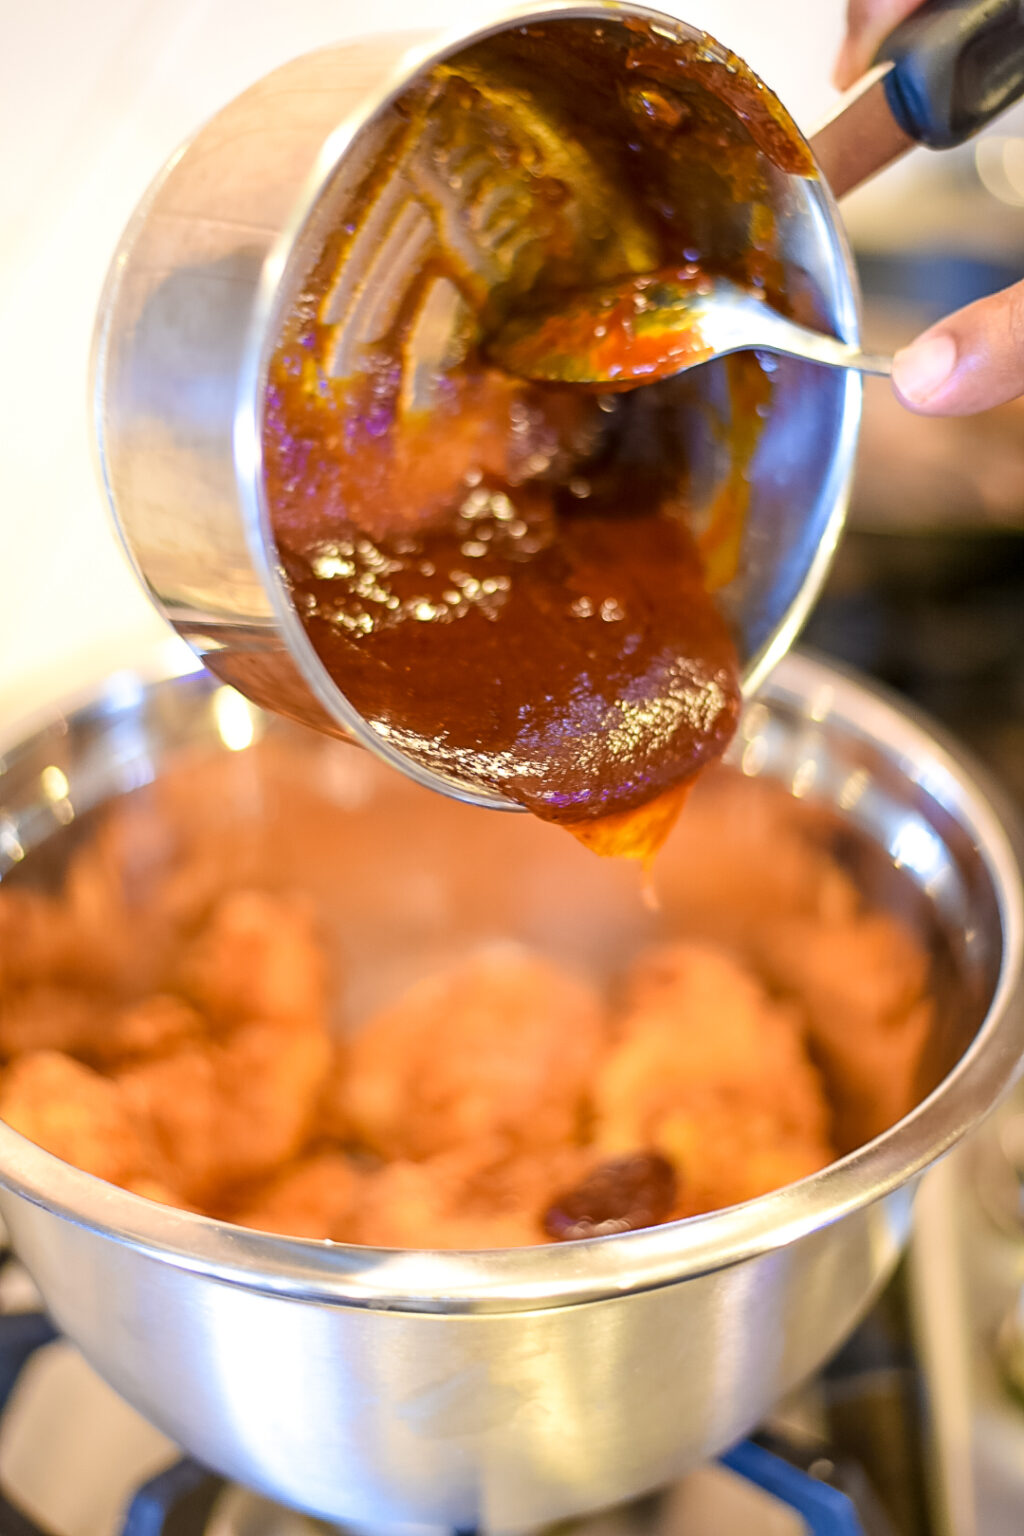 Toss the chicken tenders in BBQ sauce